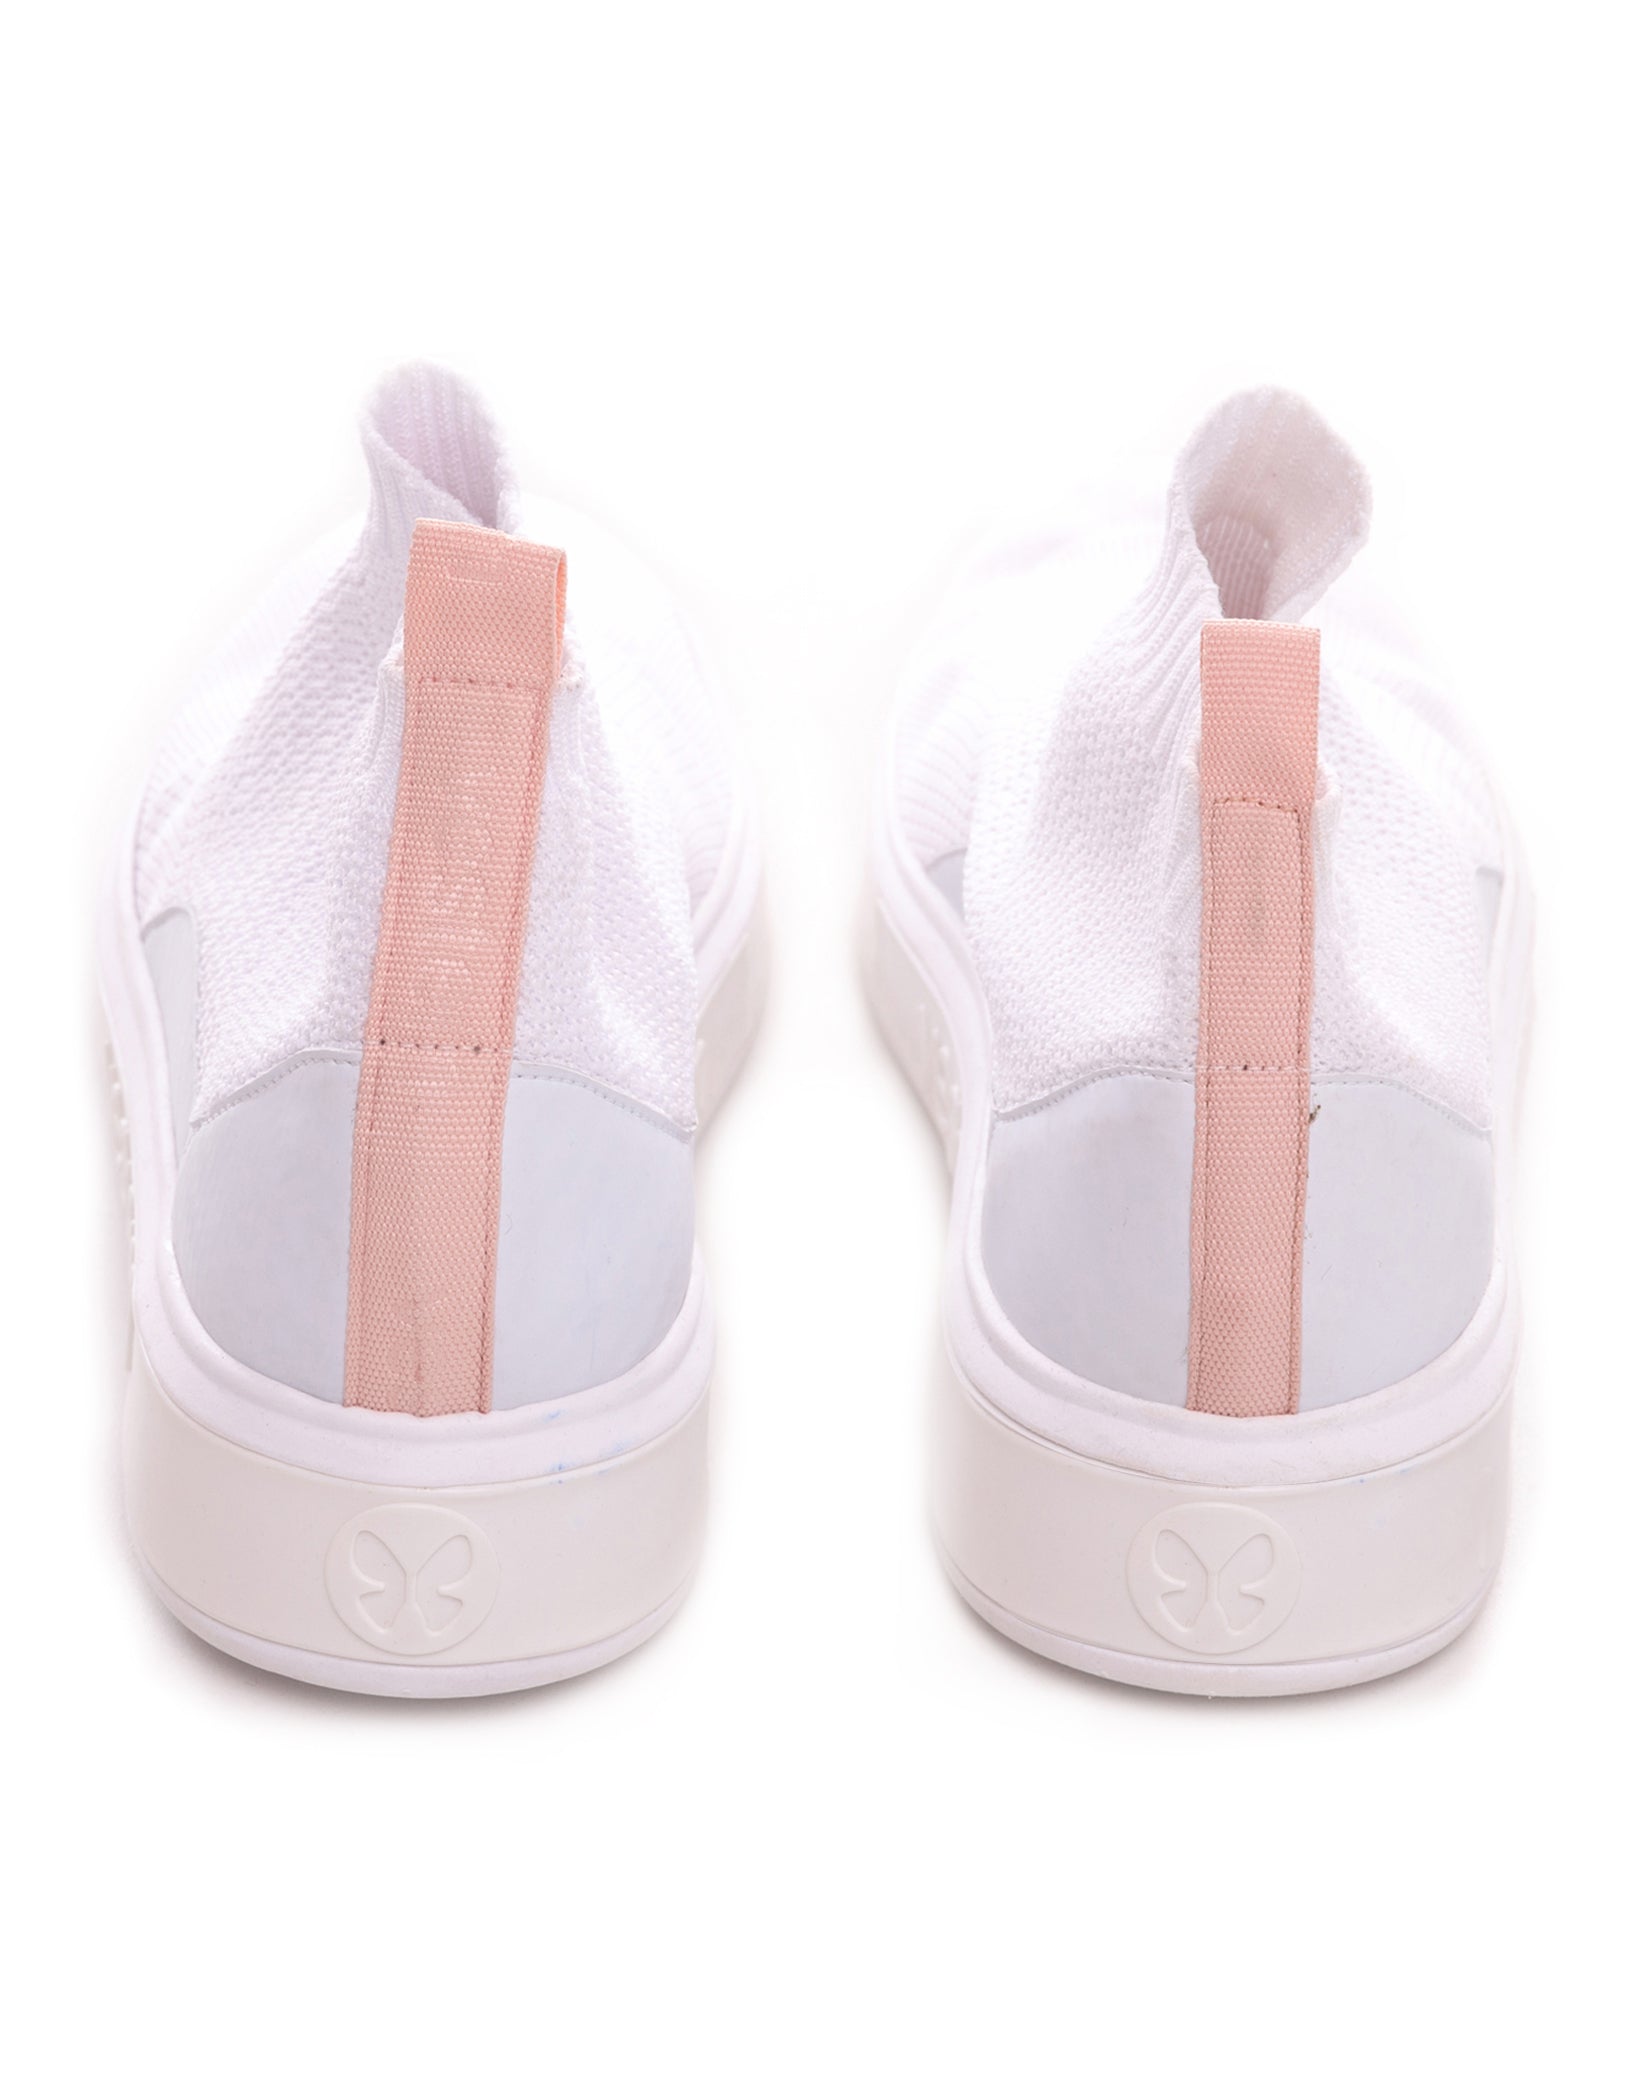 Vestem - Monet White Sneakers - TE22C0001